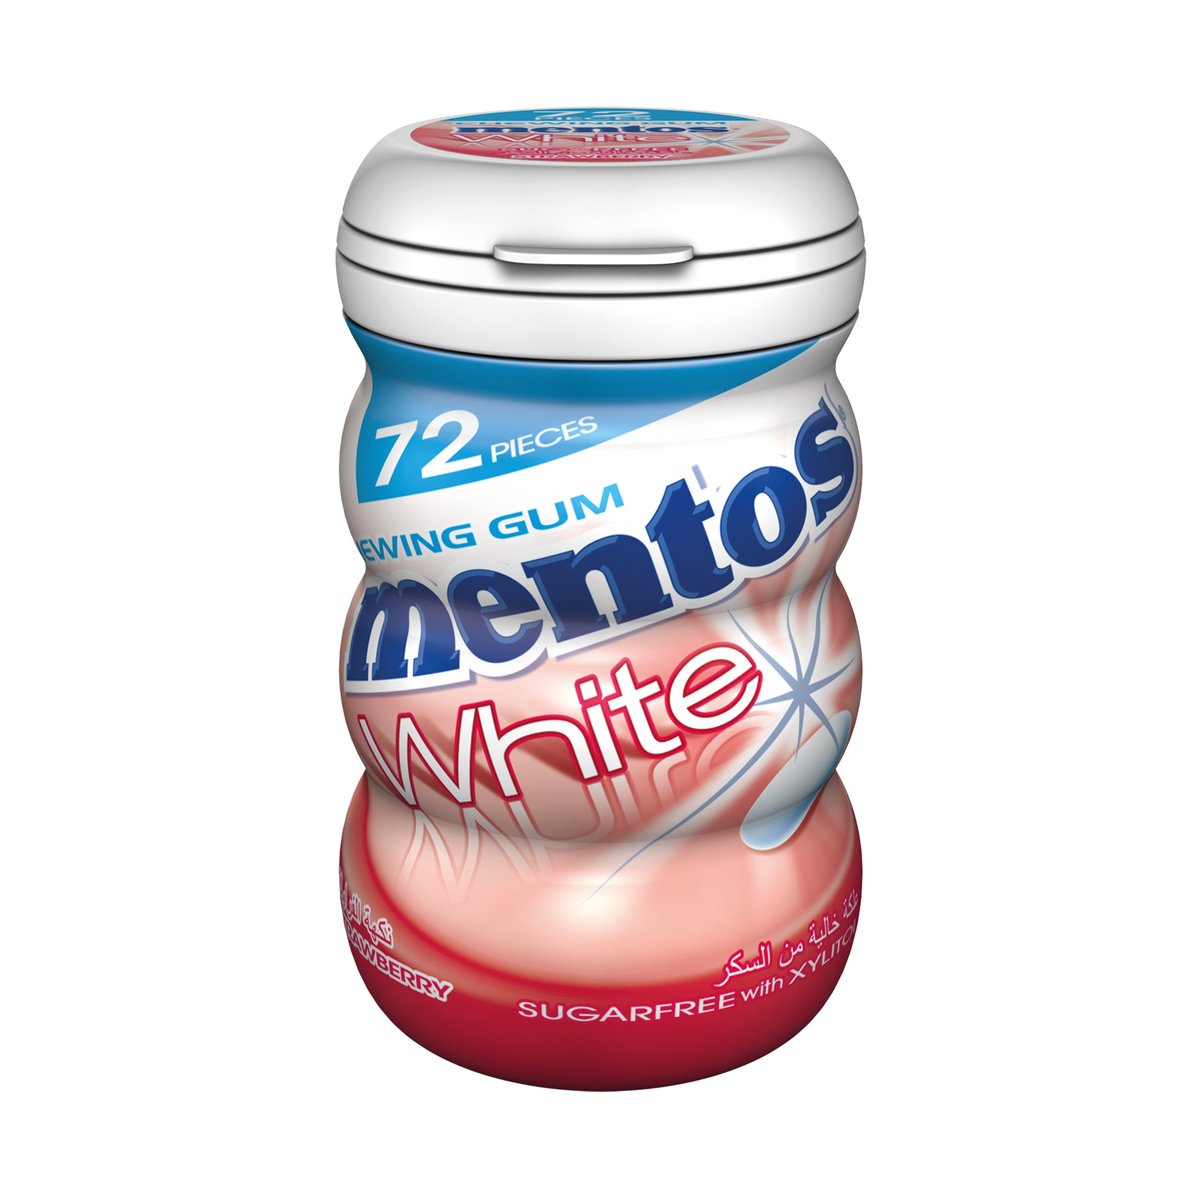 Mentos White Sugar Free Chewing Gum Strawberry Flavour 102.6 g